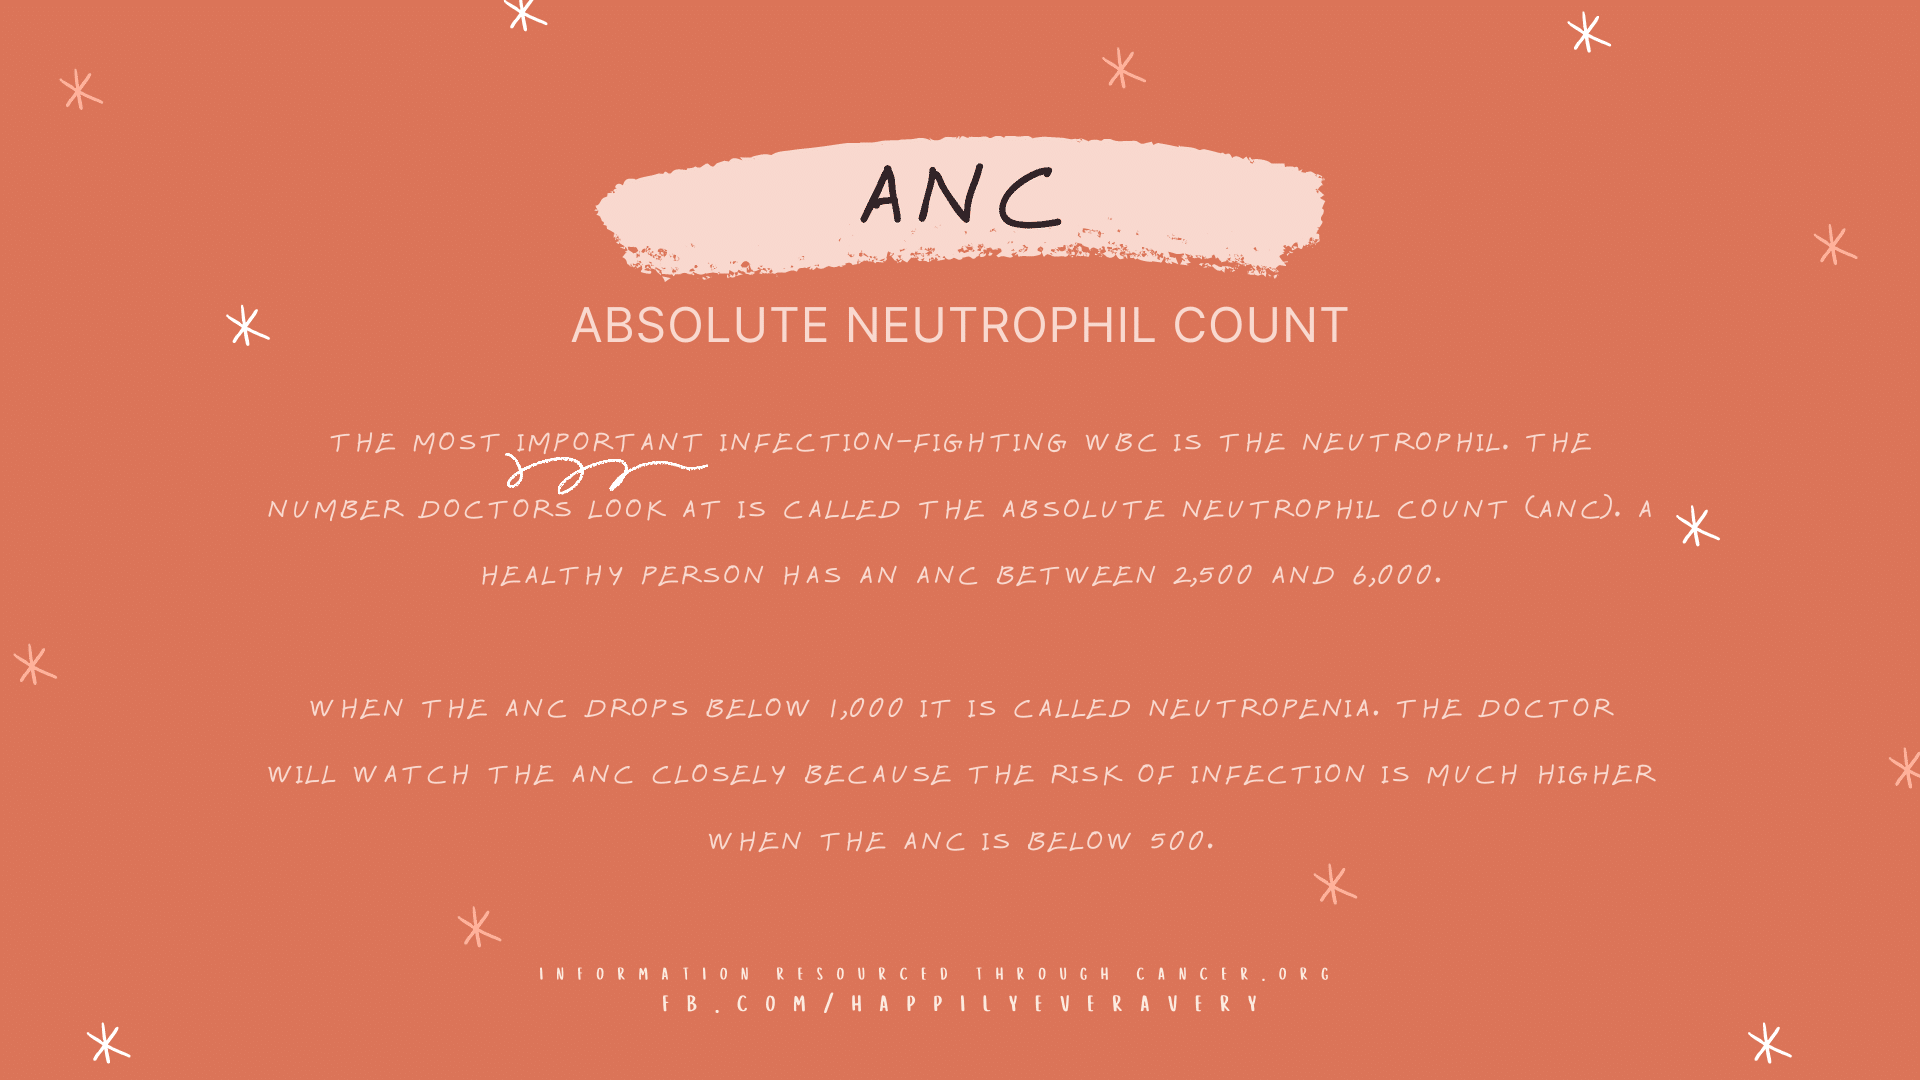 ANC absolute neutrophil count